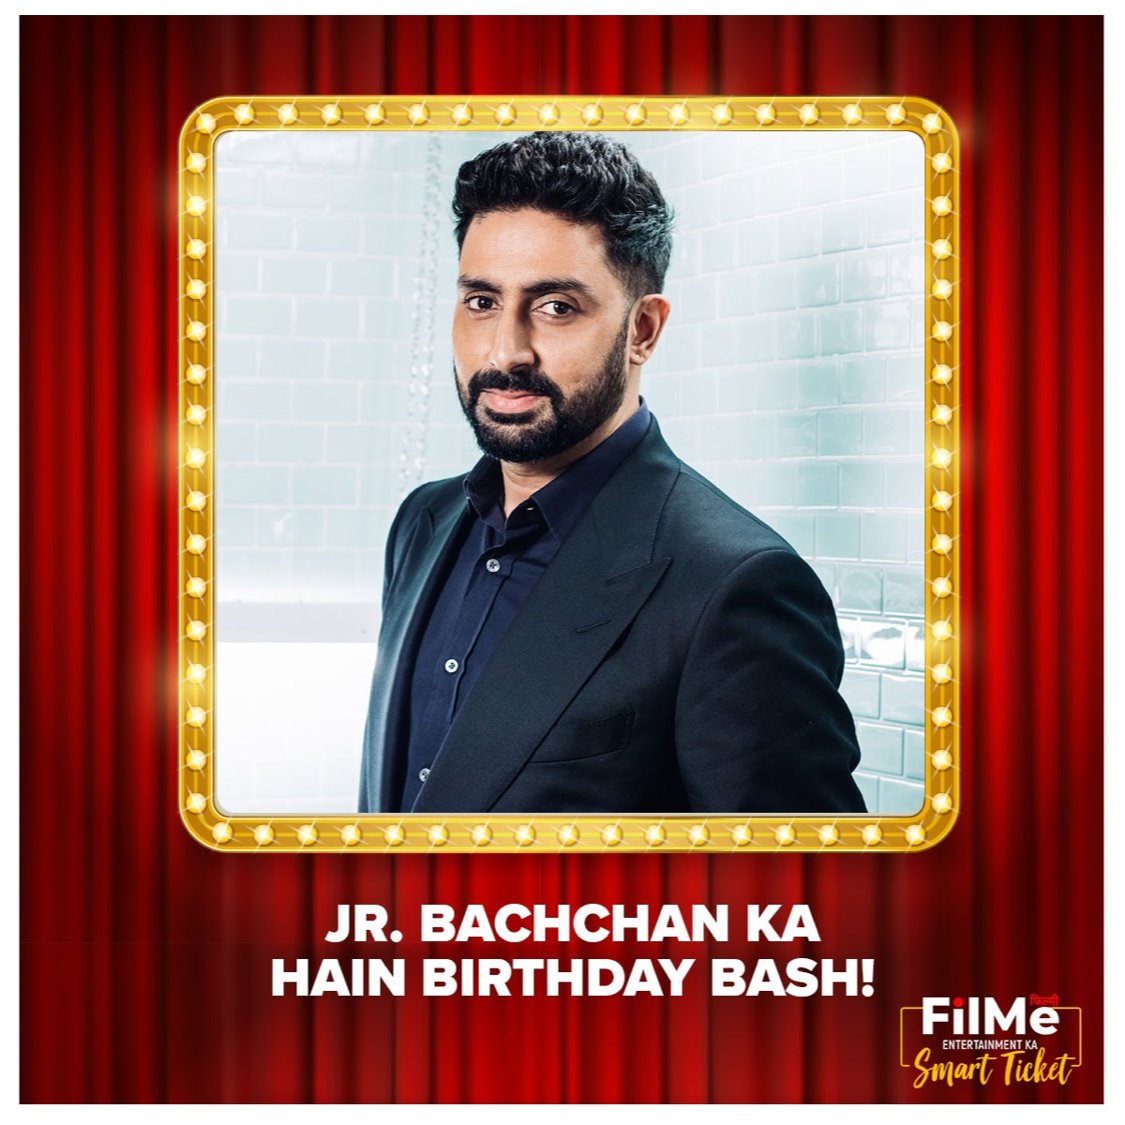 Happy Birthday to the Swag-Star of Bollywood - Abhishek Bachchan! 